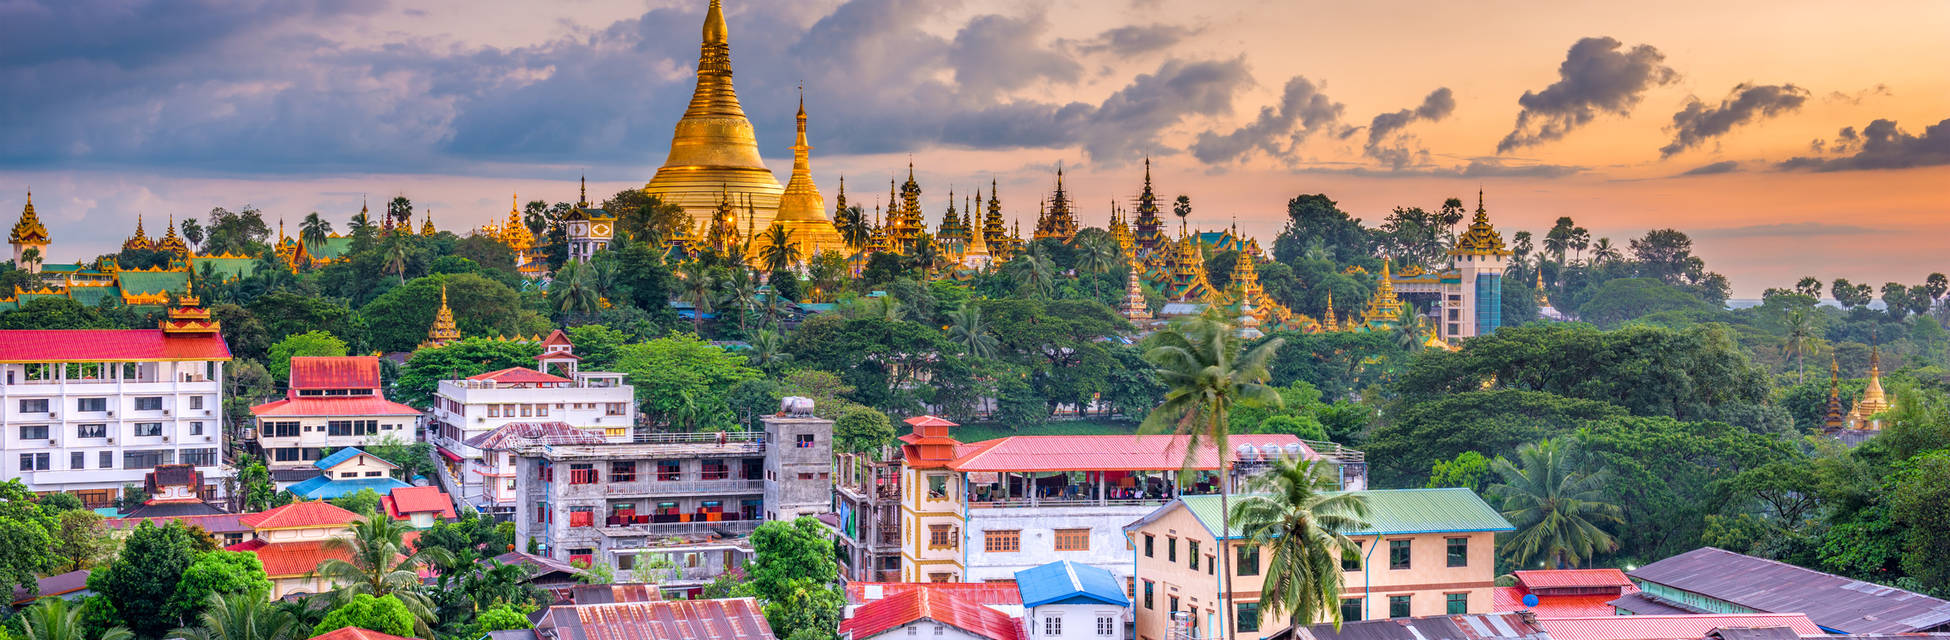 yangon-schwedagon-pagode-tempel-Fotolia_163306270_L.jpg